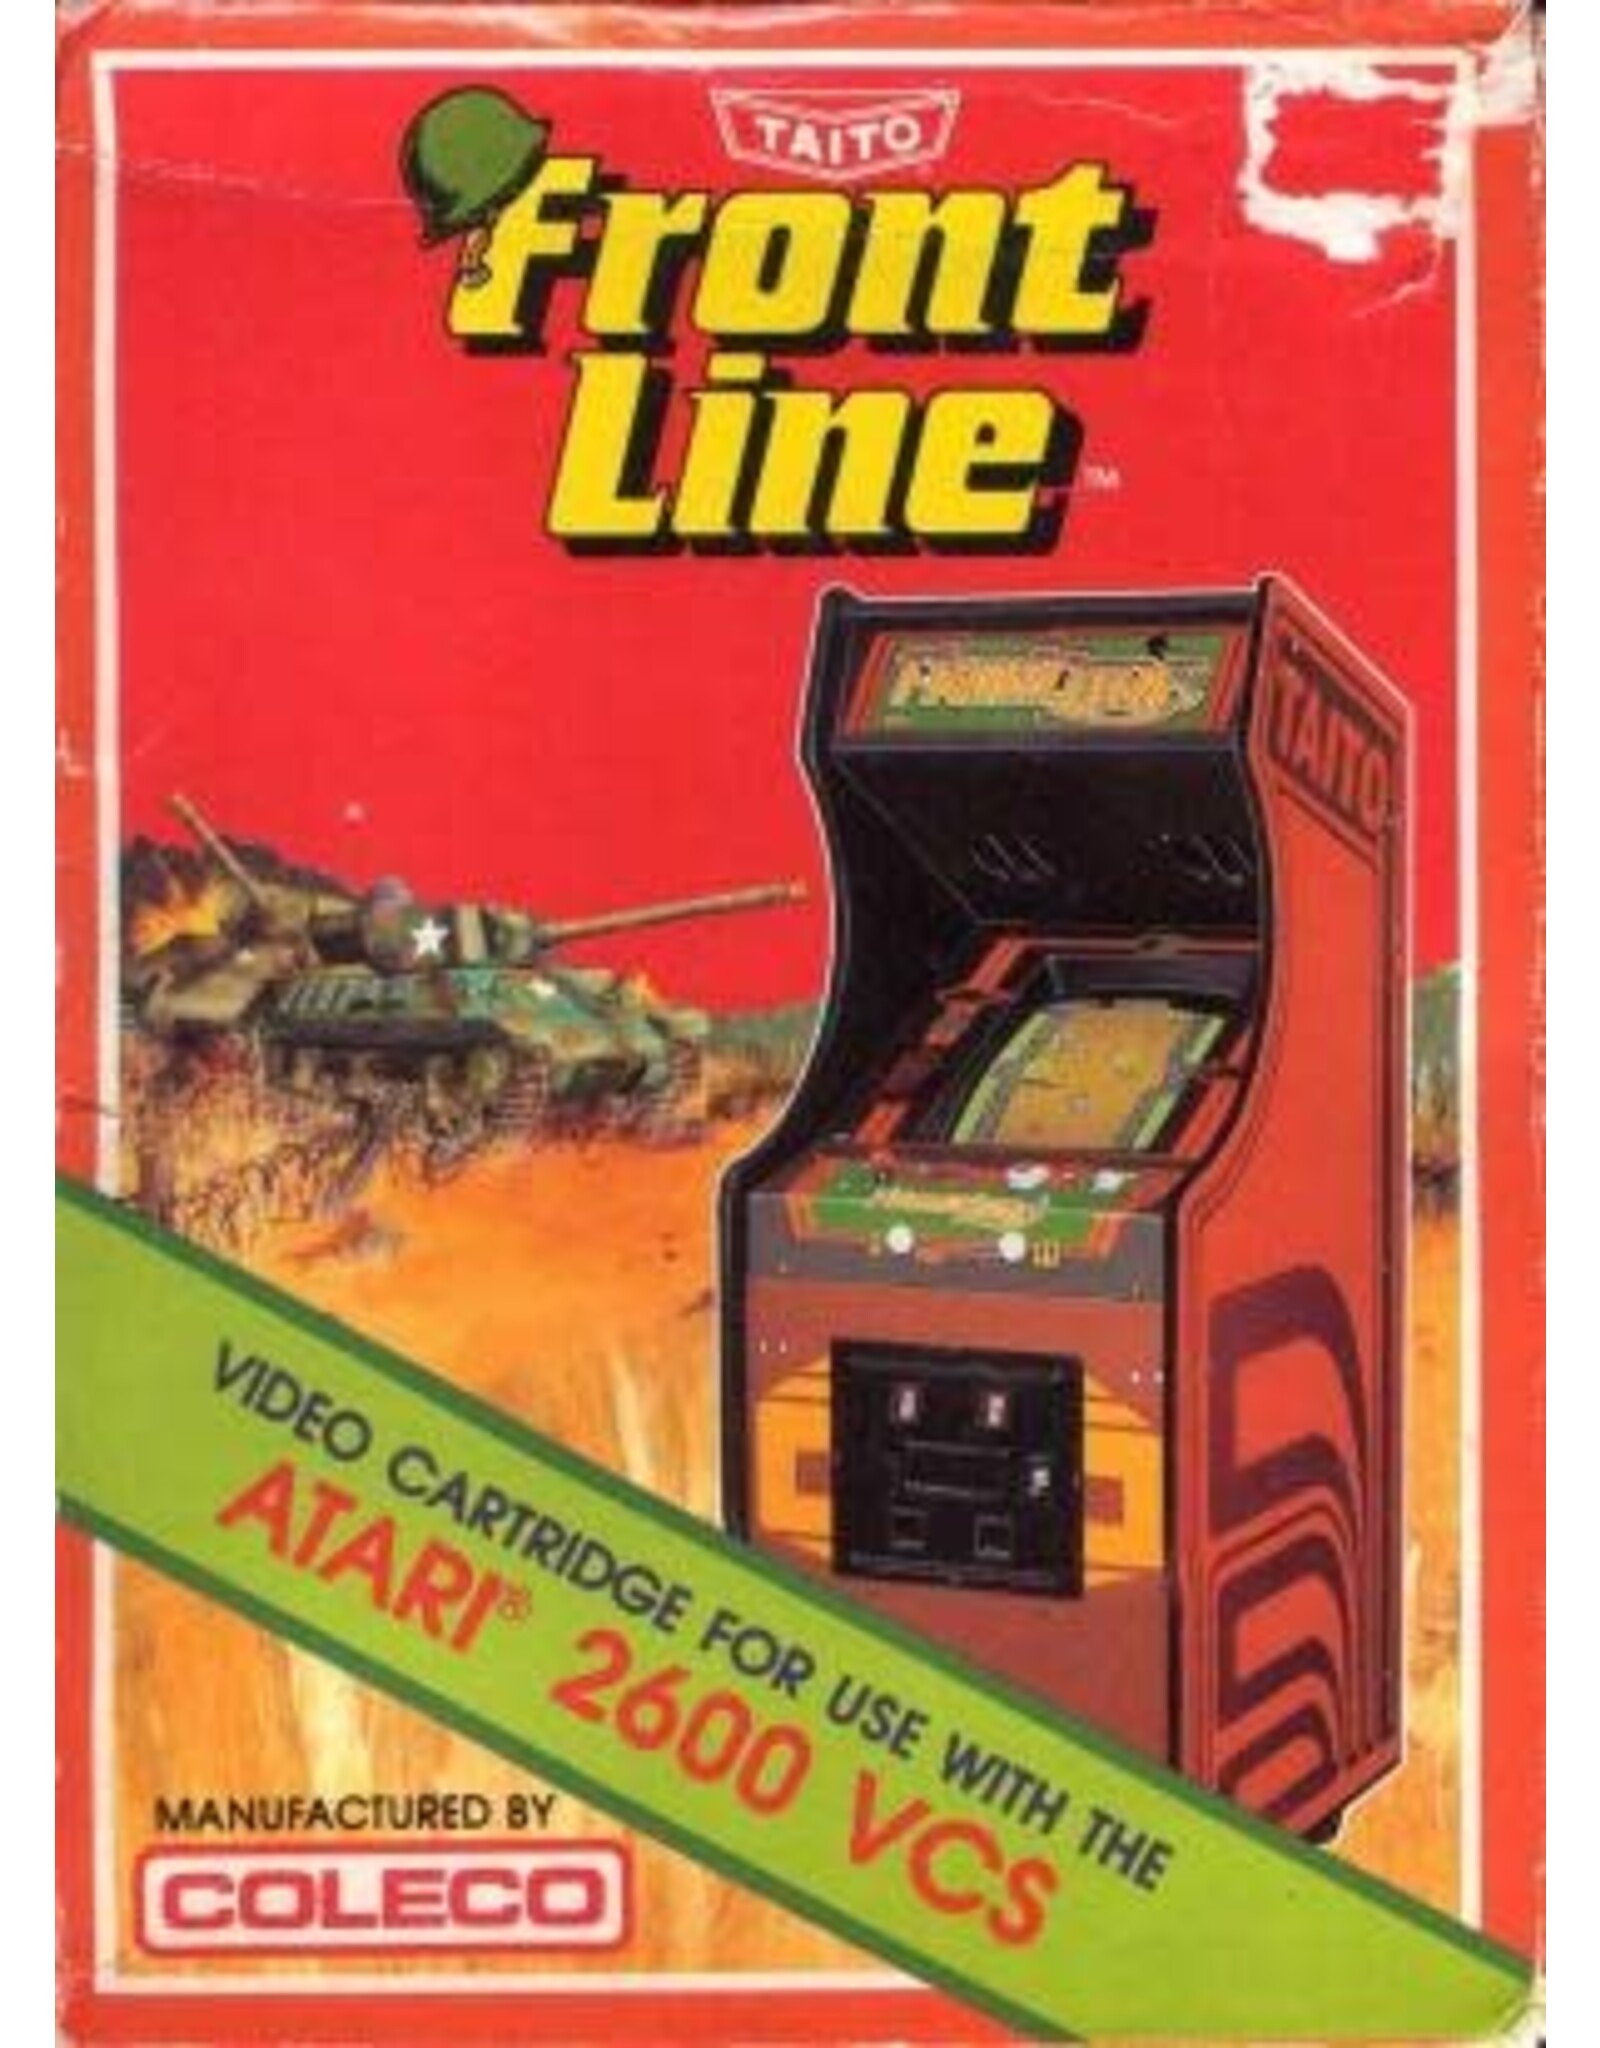 Atari 2600 Front Line (Cart Only, Damaged Cart & Label)